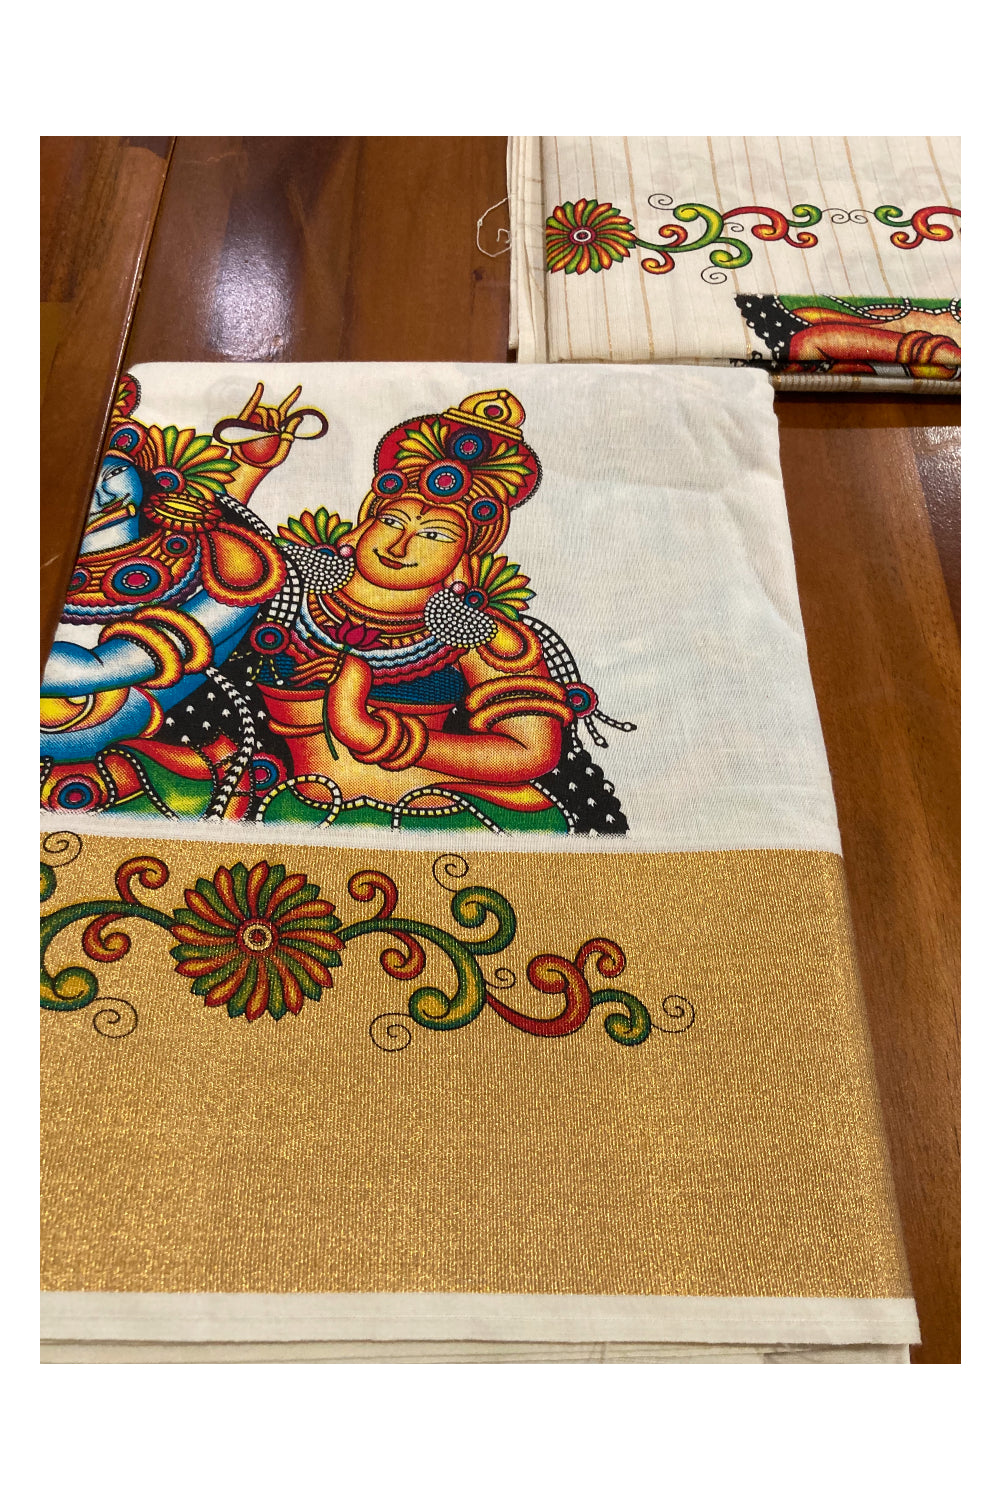 Kerala Cotton Kasavu Churidar Salwar Material with Mural Printed Krishna Radha Design (include Lines Printed Shawl / Dupatta)